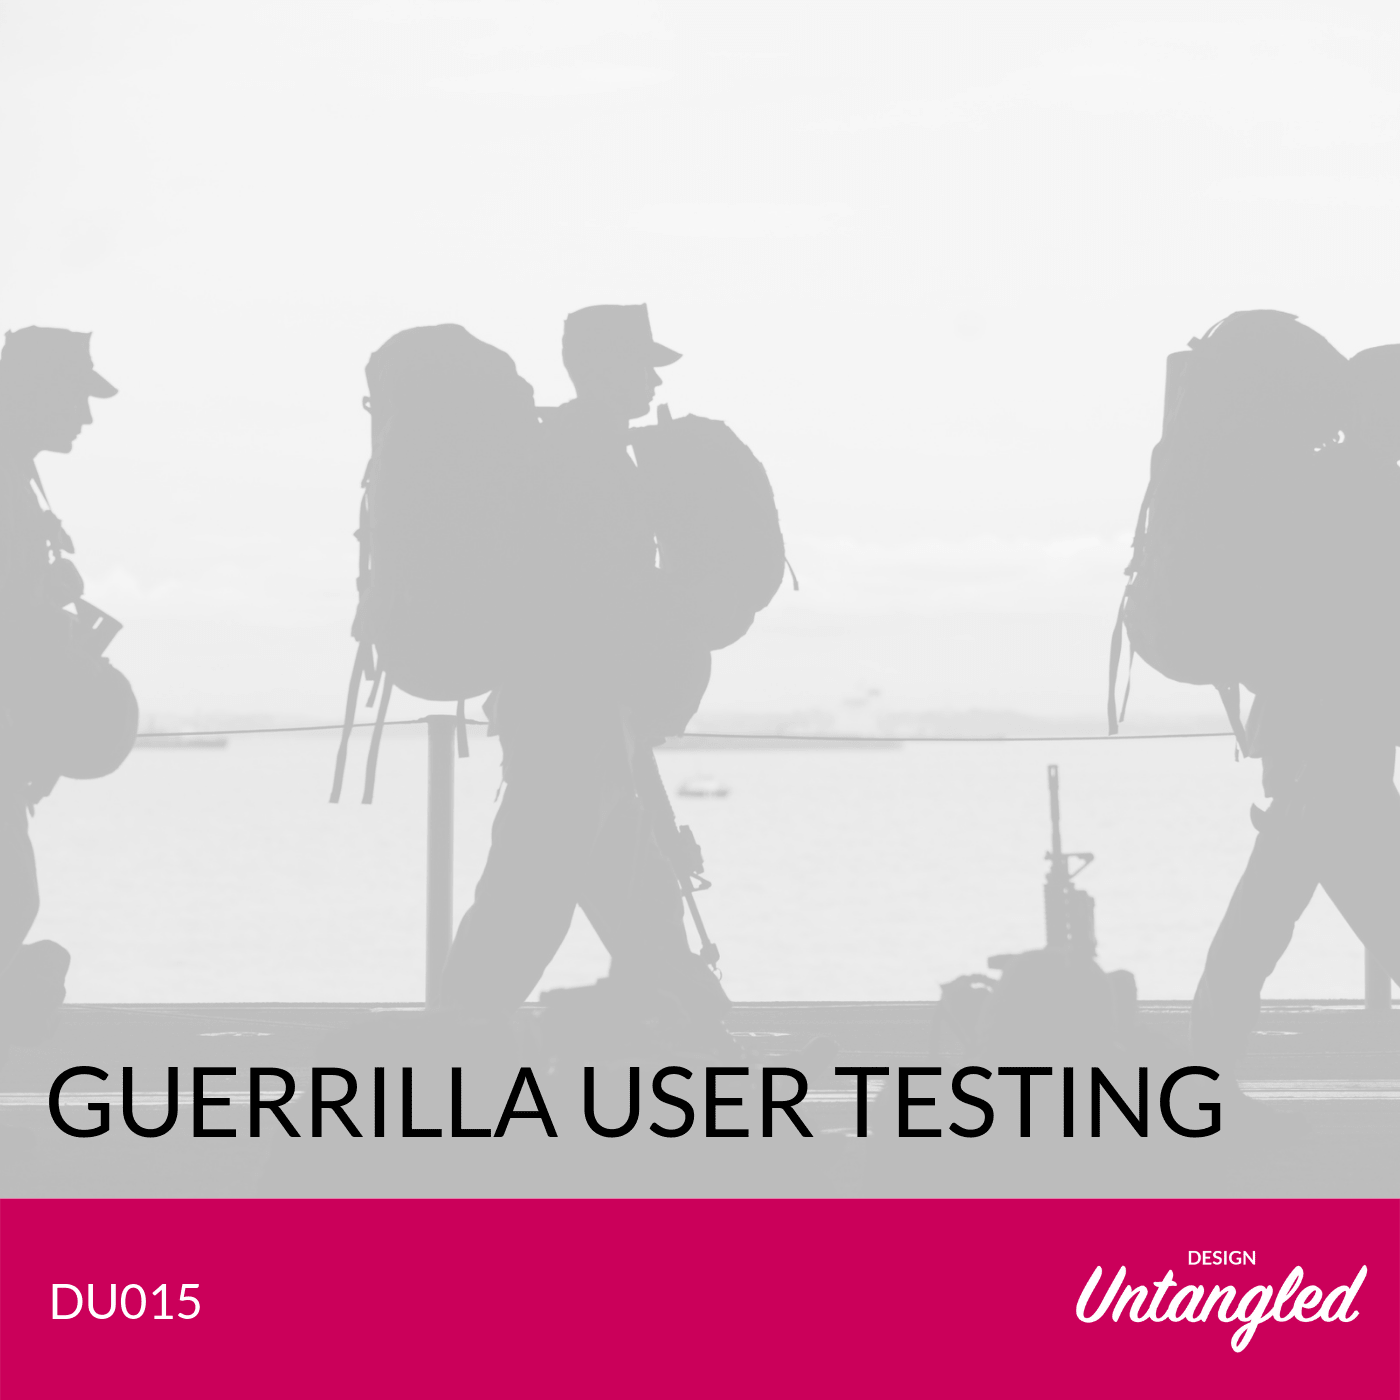 DU015 – Guerrilla User Testing